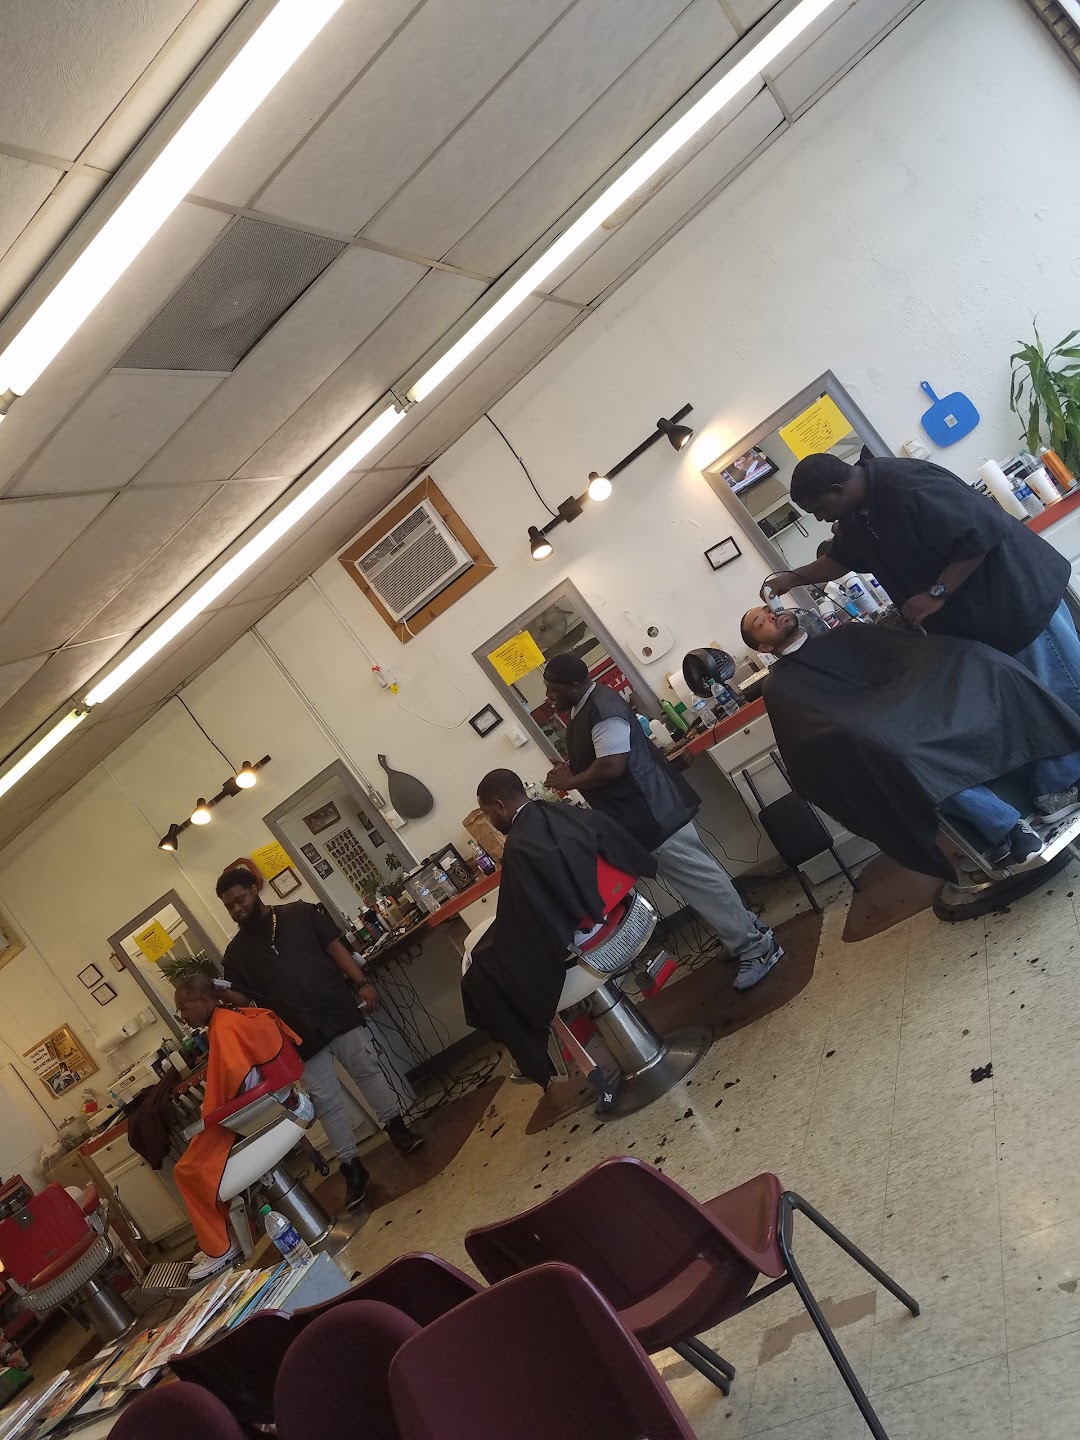 Randolphs Barber Shop